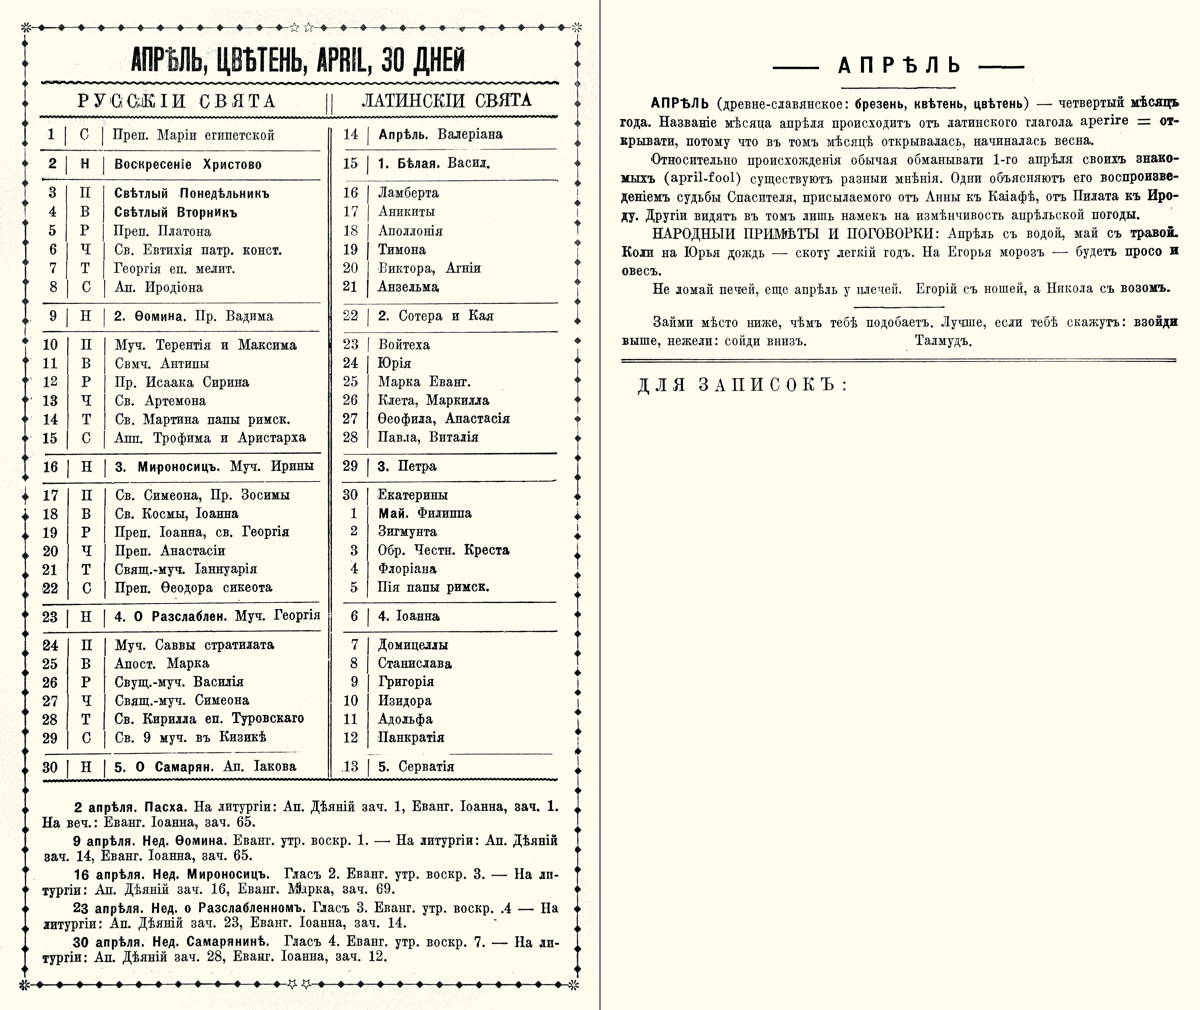 Orthodox Church Calendar, April 1928